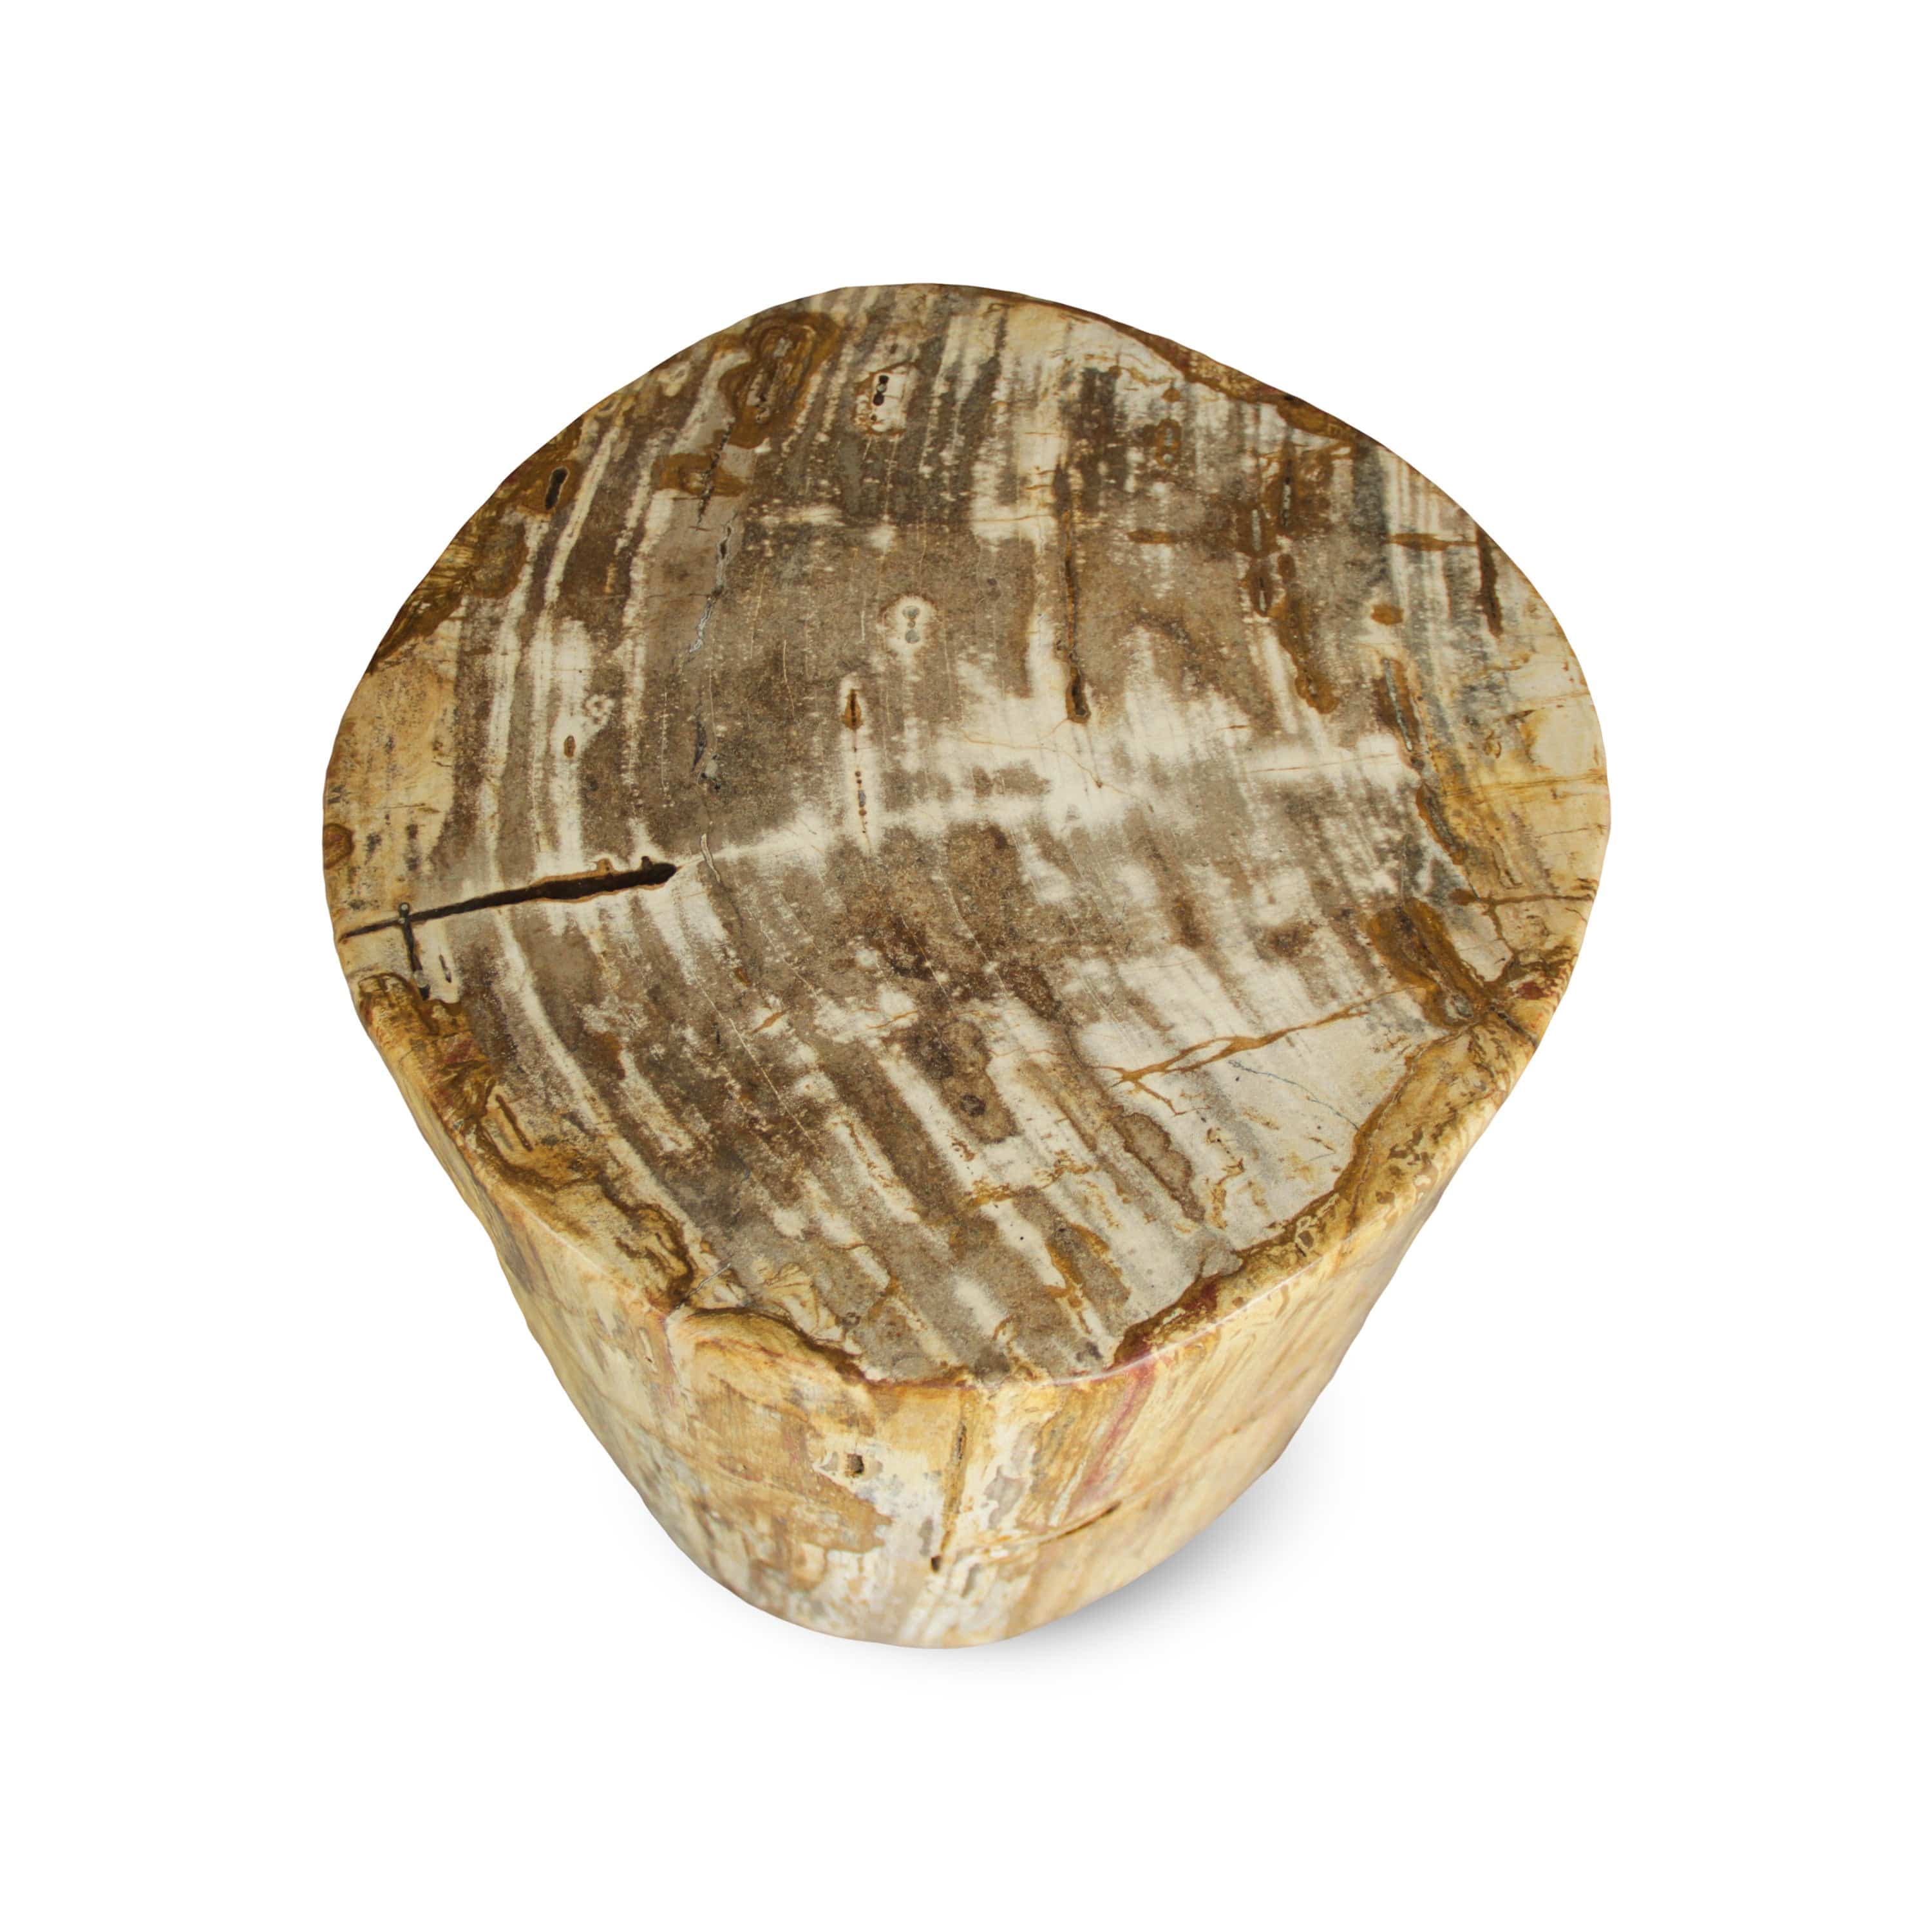 Kalifano Petrified Wood Petrified Wood Round Stump / Stool from Indonesia - 16" / 187 lbs PWS3400.008